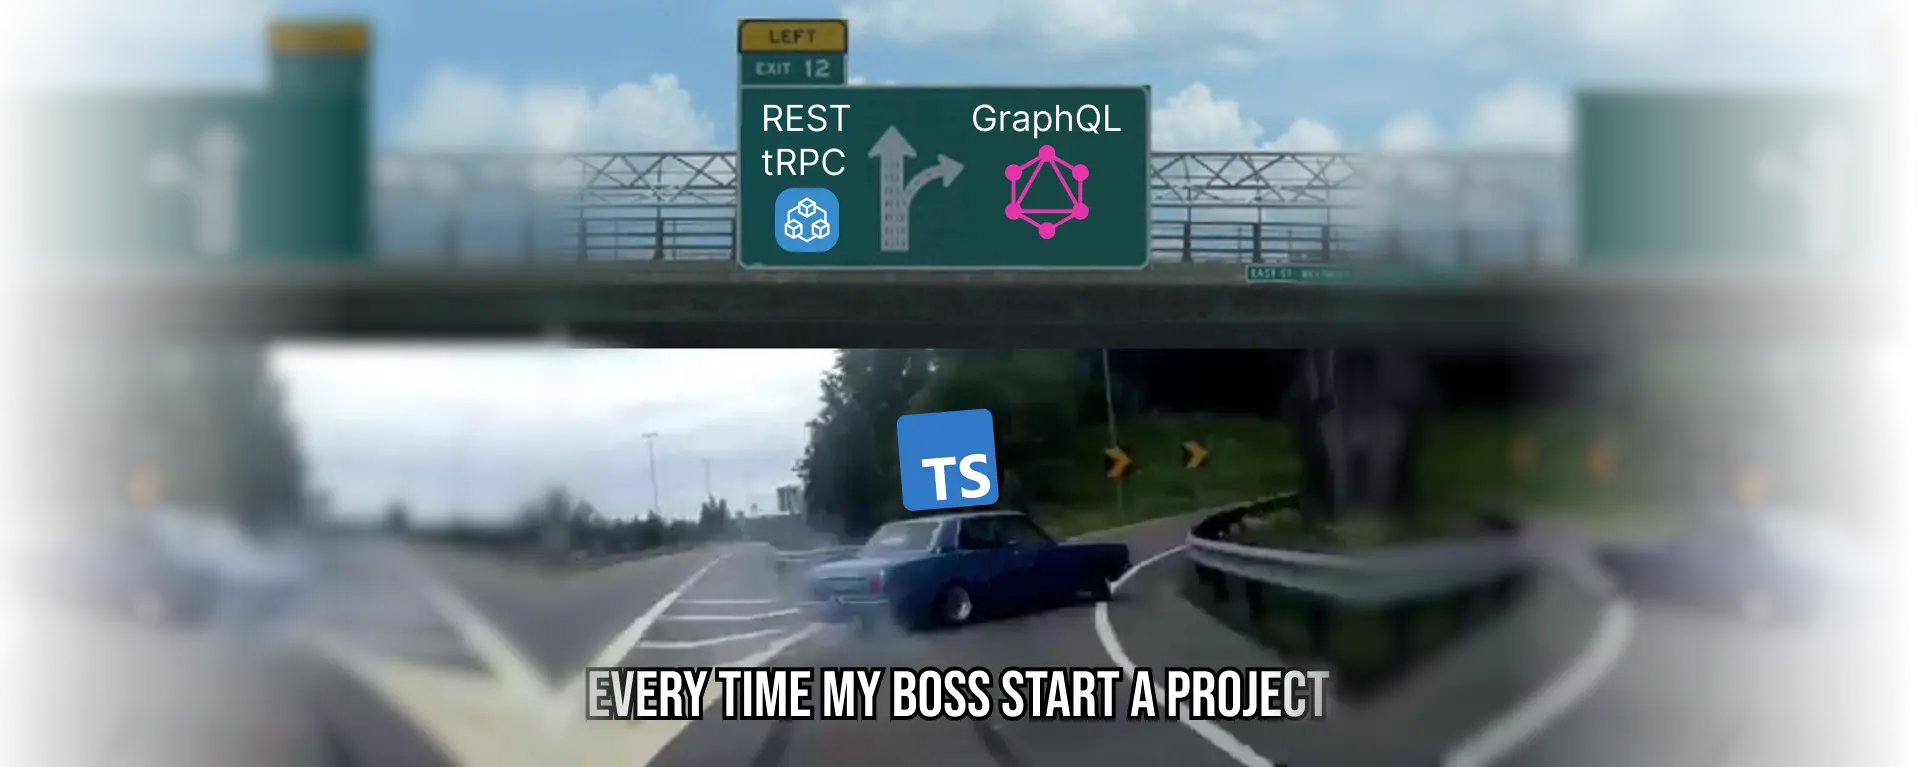 Meme about GraphQL vs REST API & tRPC